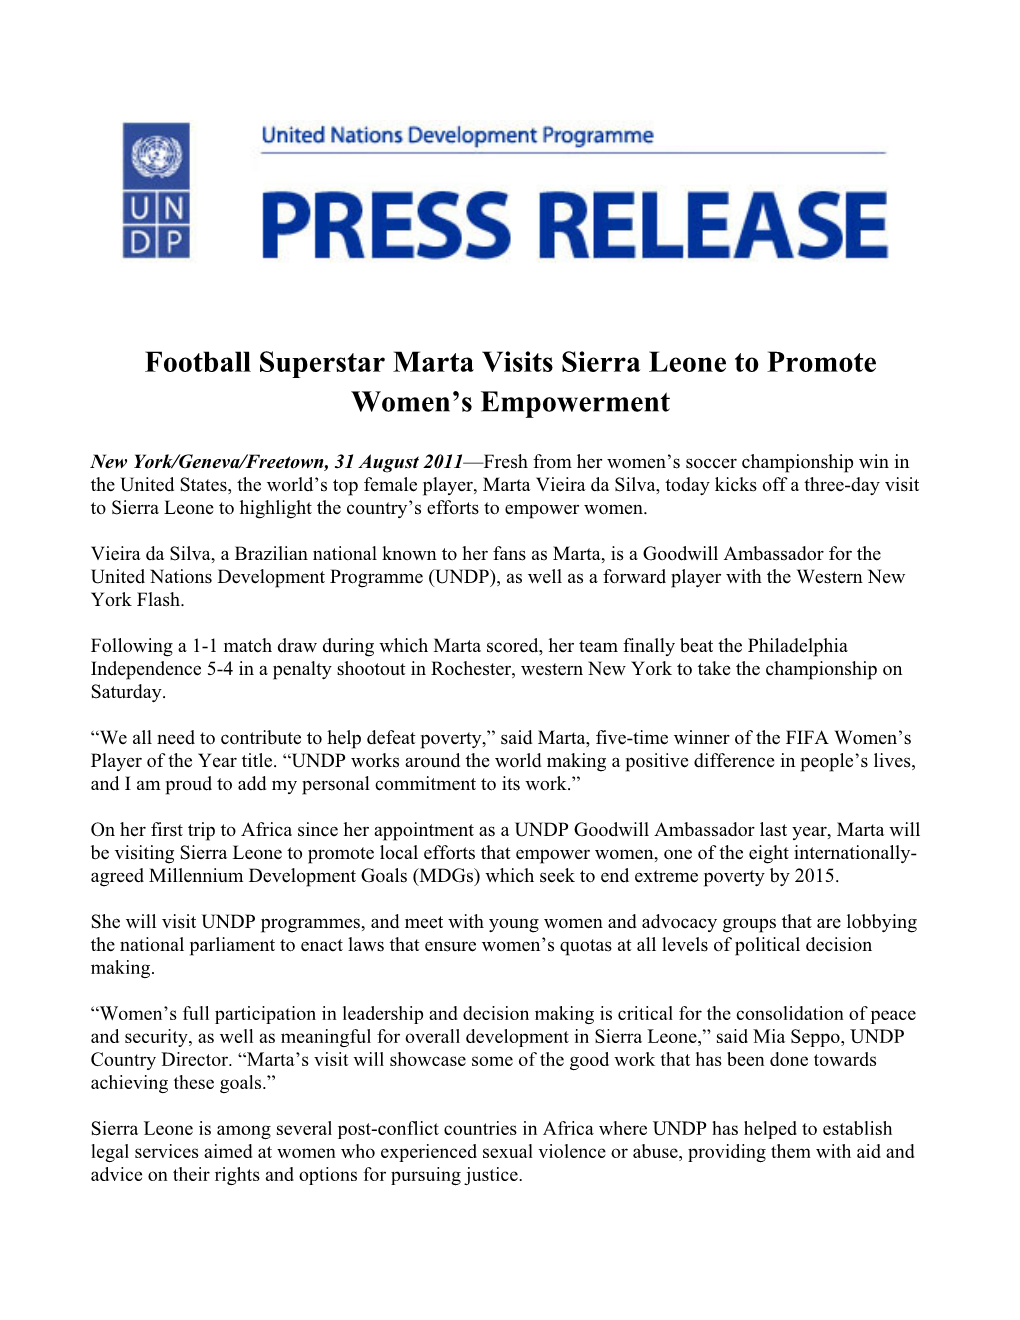 Football Superstar Marta Visits Sierra Leone to Promote Women's